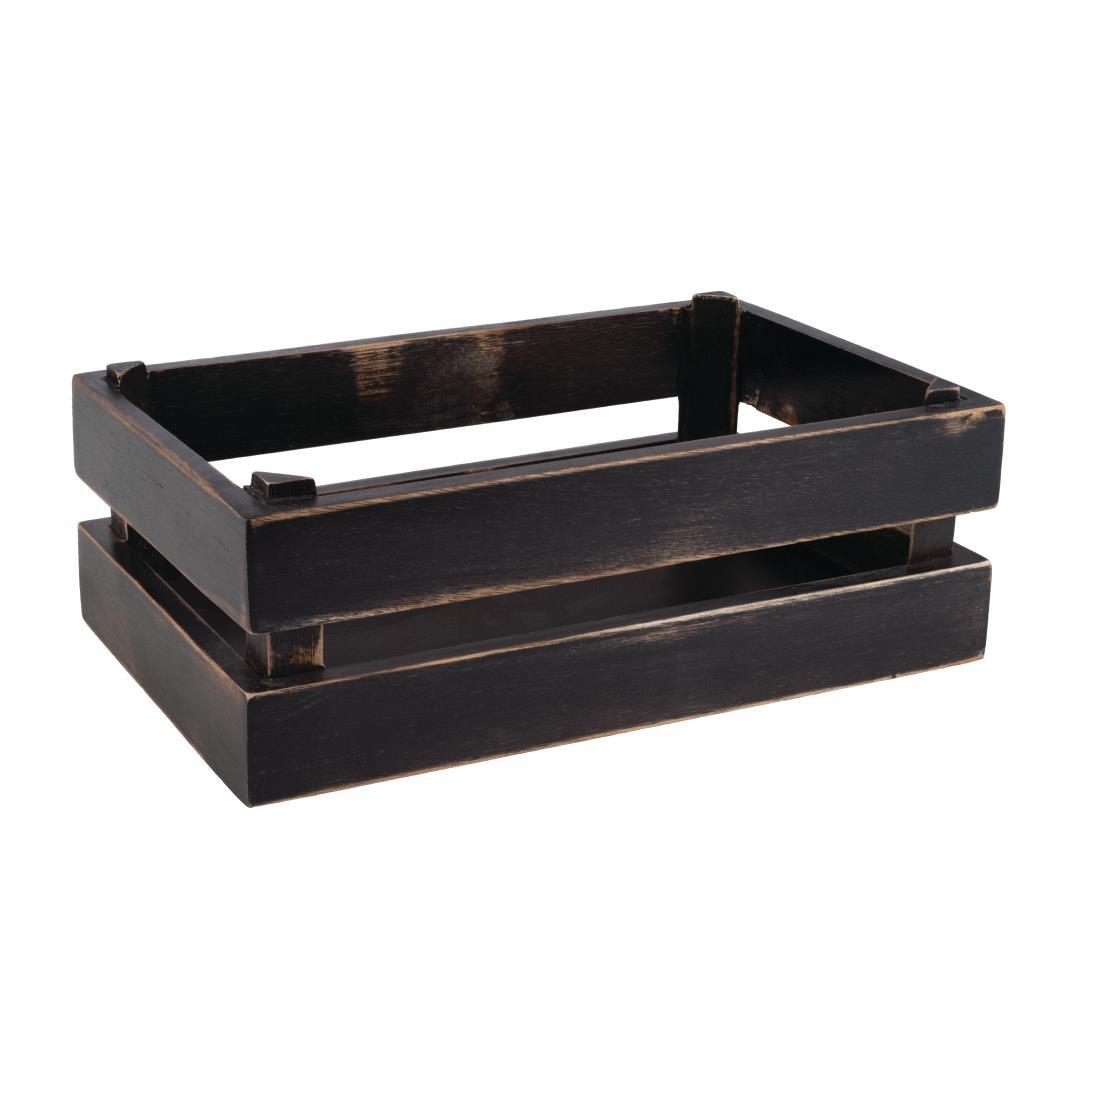 APS Superbox Wooden Buffet Crate Black Vintage 1/4 GN - FE980  - 1